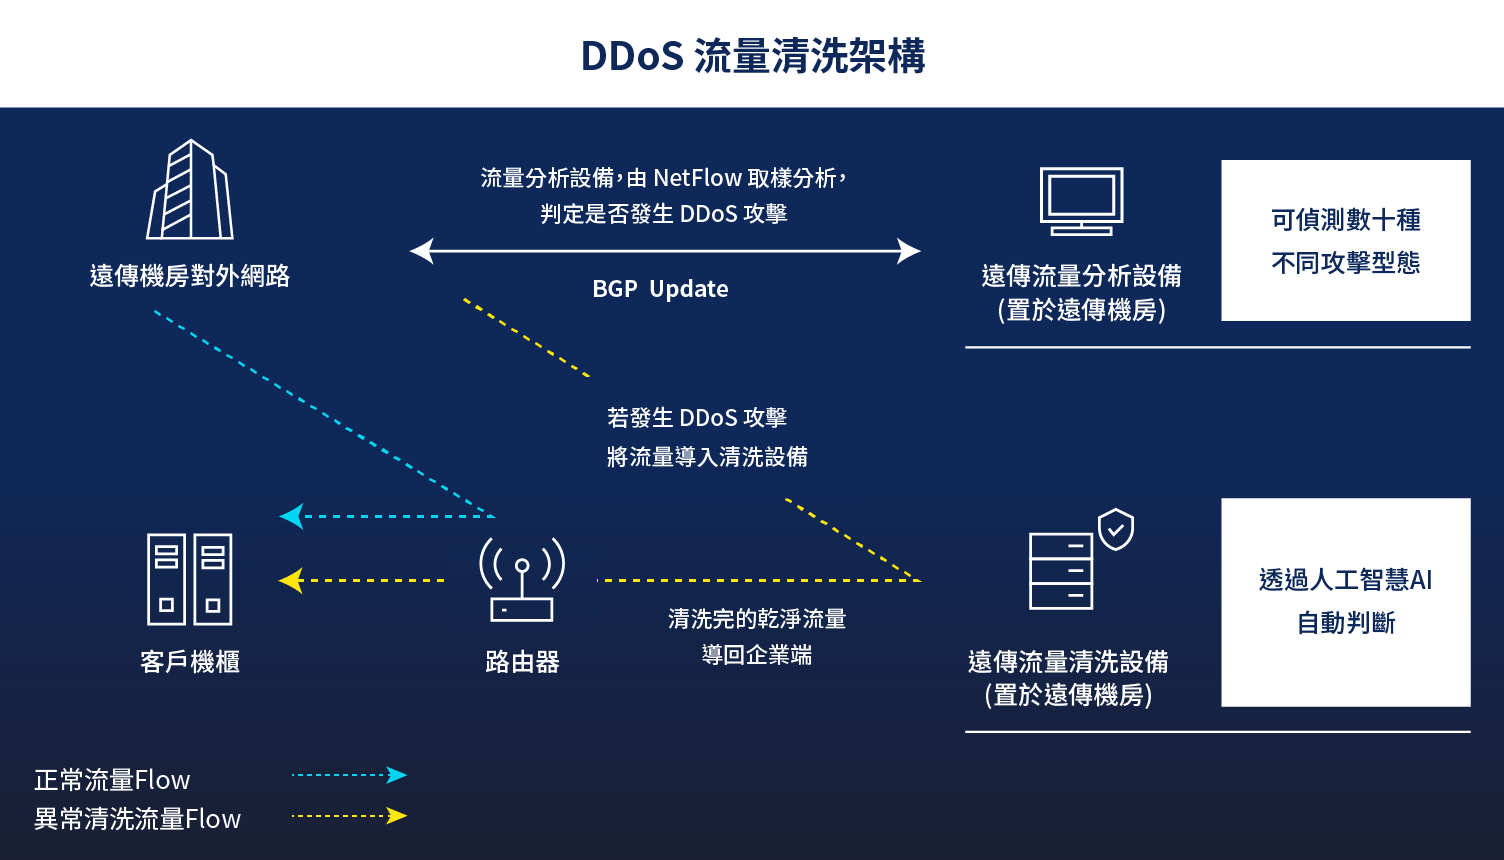 /content/dam/fetnet/user_resource/ebu/images/product/ddos/DDOS-flow8.png